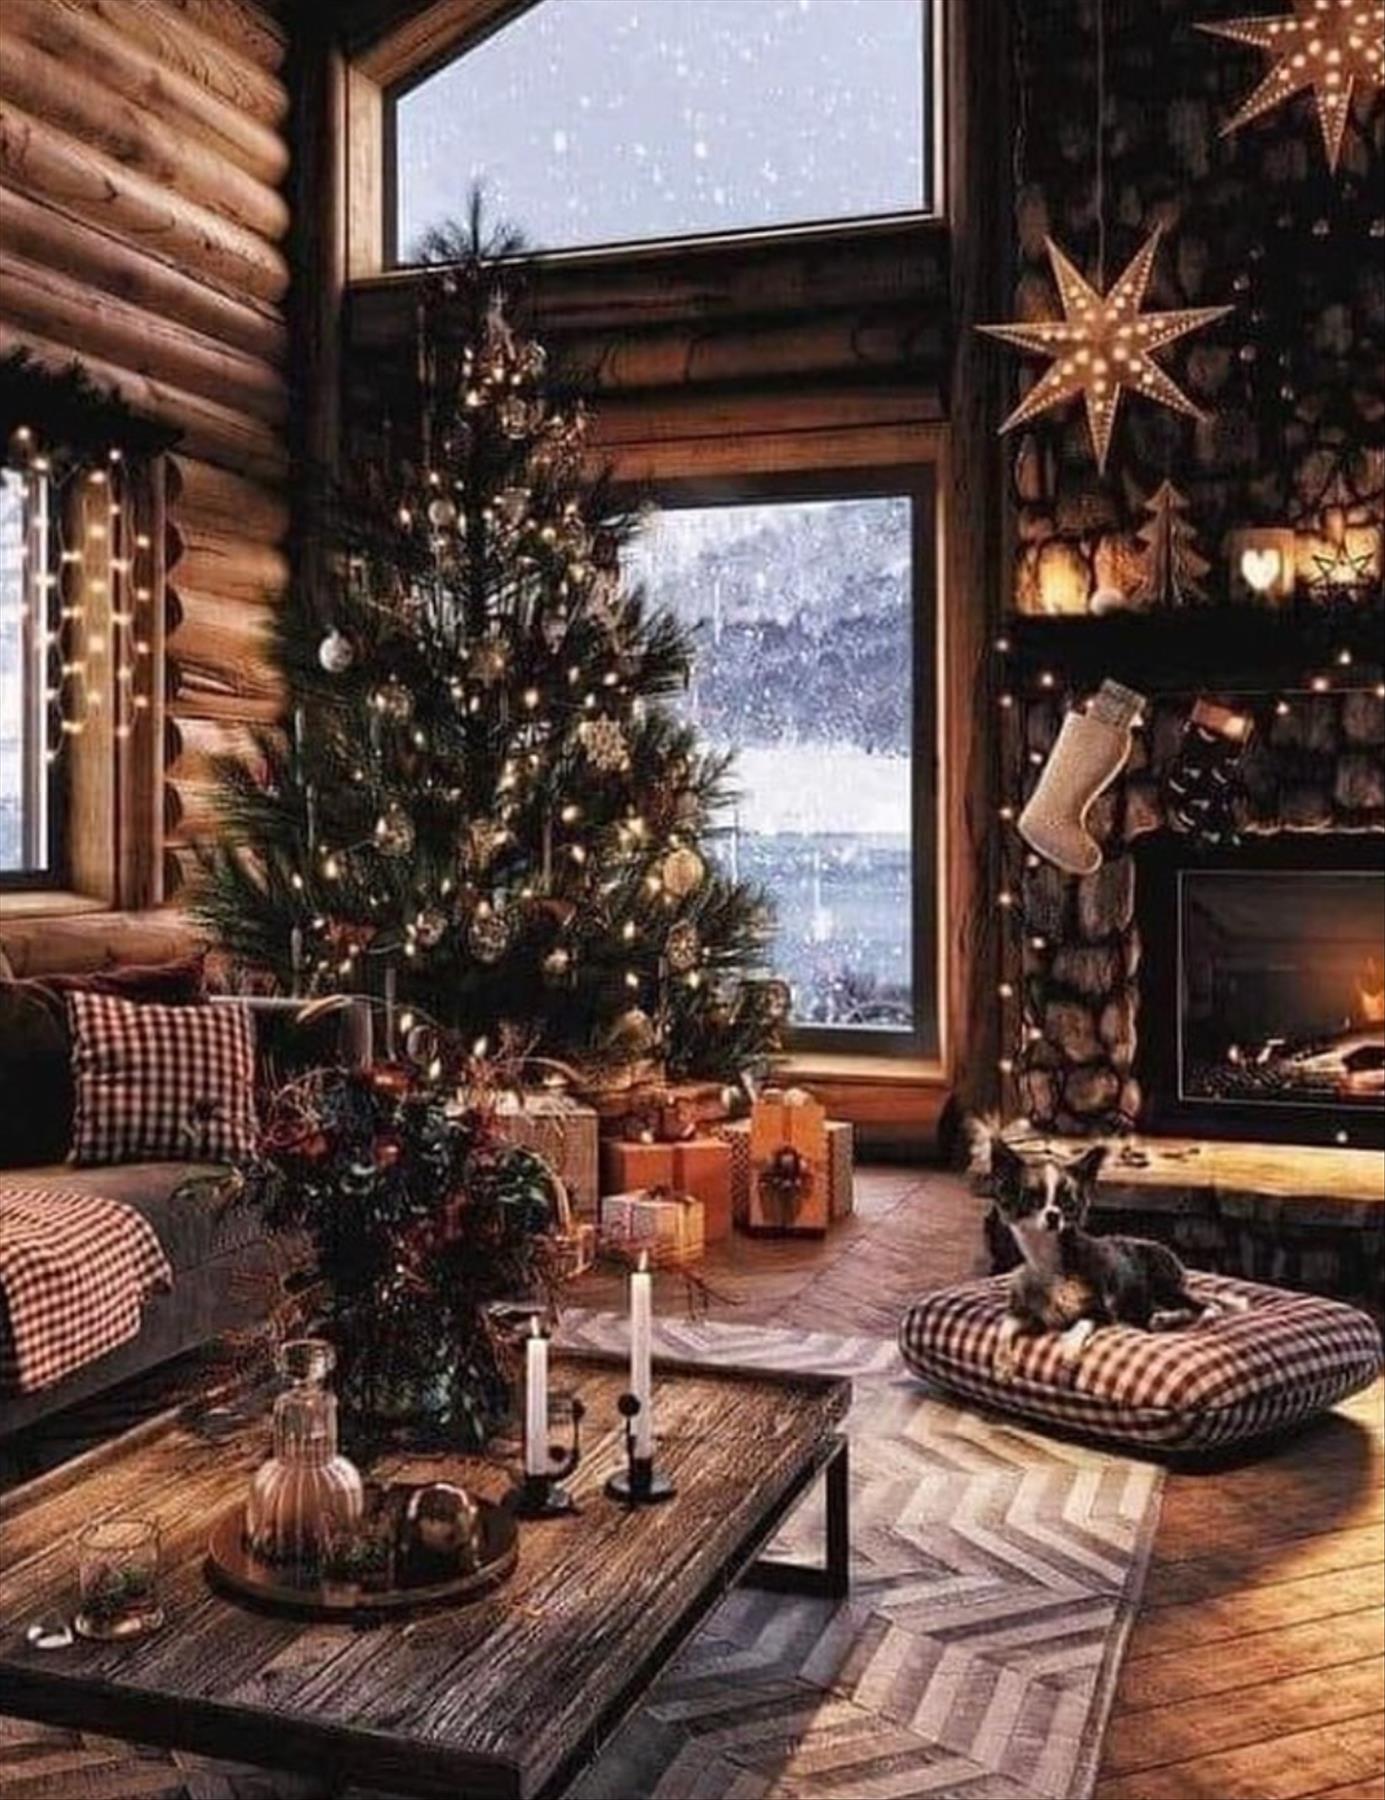 Festive Christmas tree decoration ideas for 2022